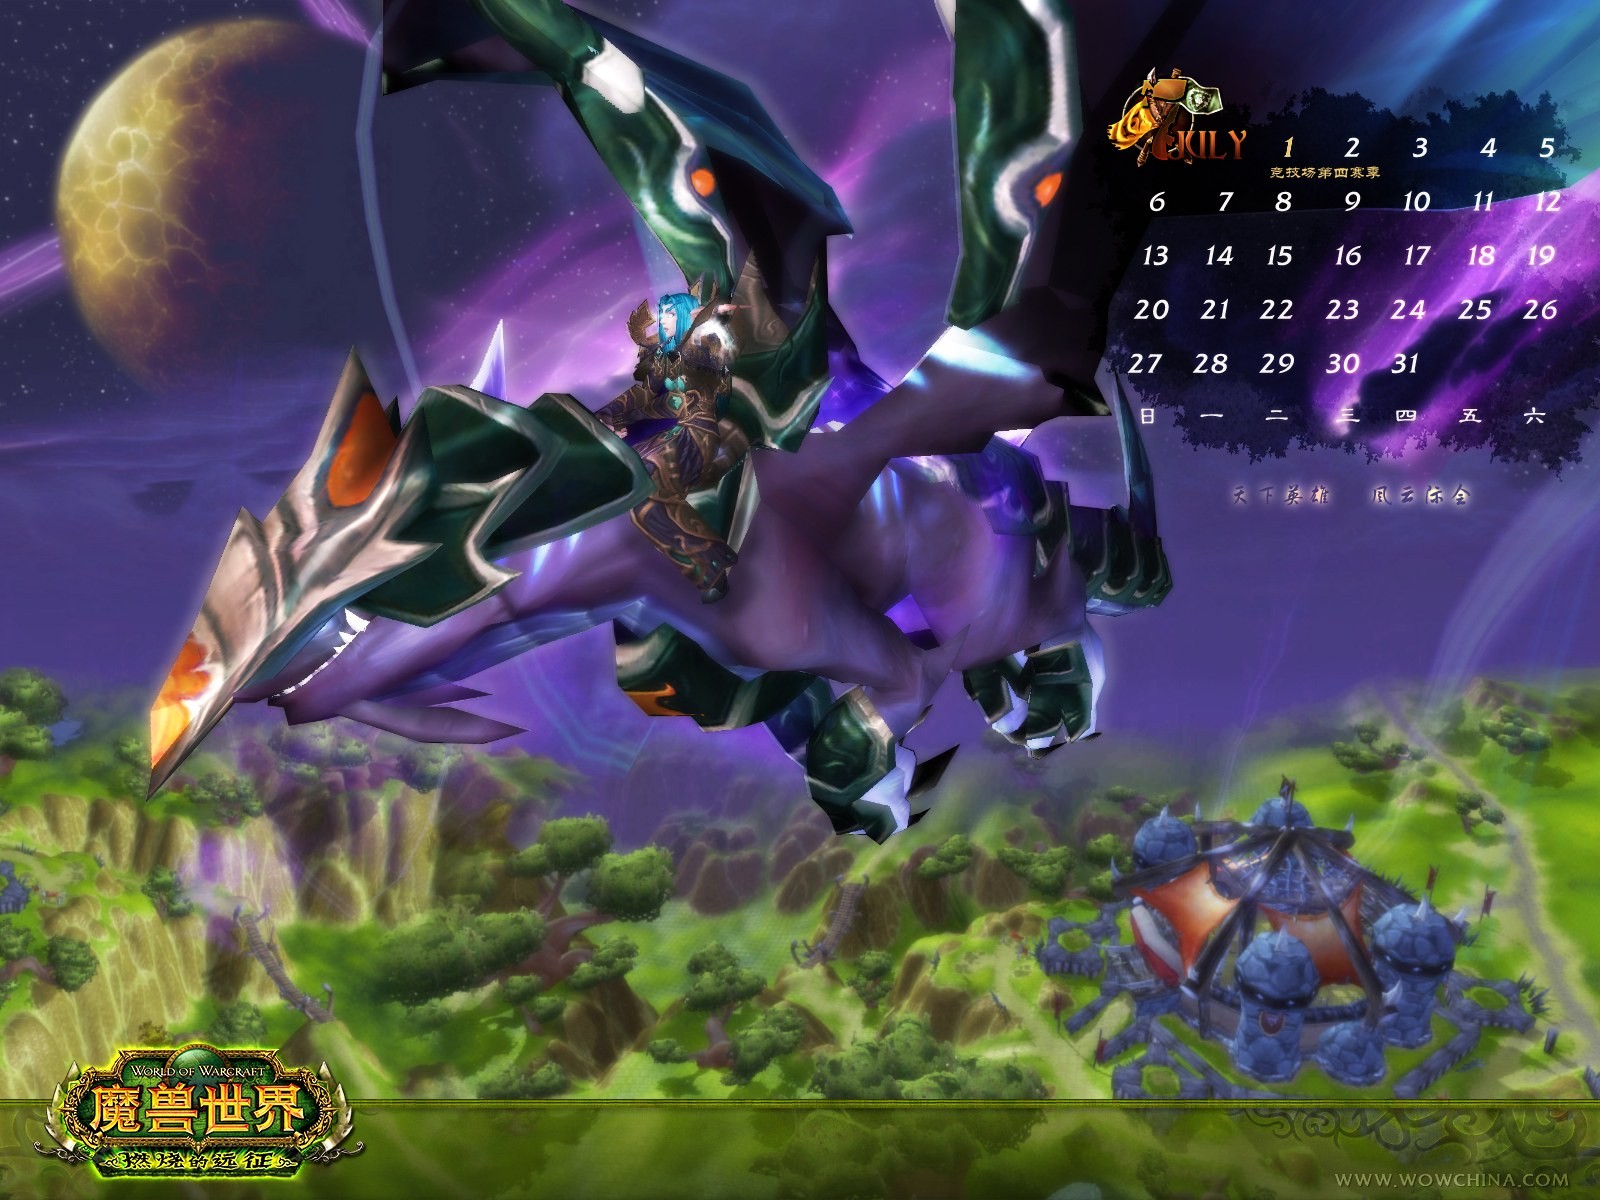 World of Warcraft: Fond d'écran officiel de Burning Crusade (2) #25 - 1600x1200